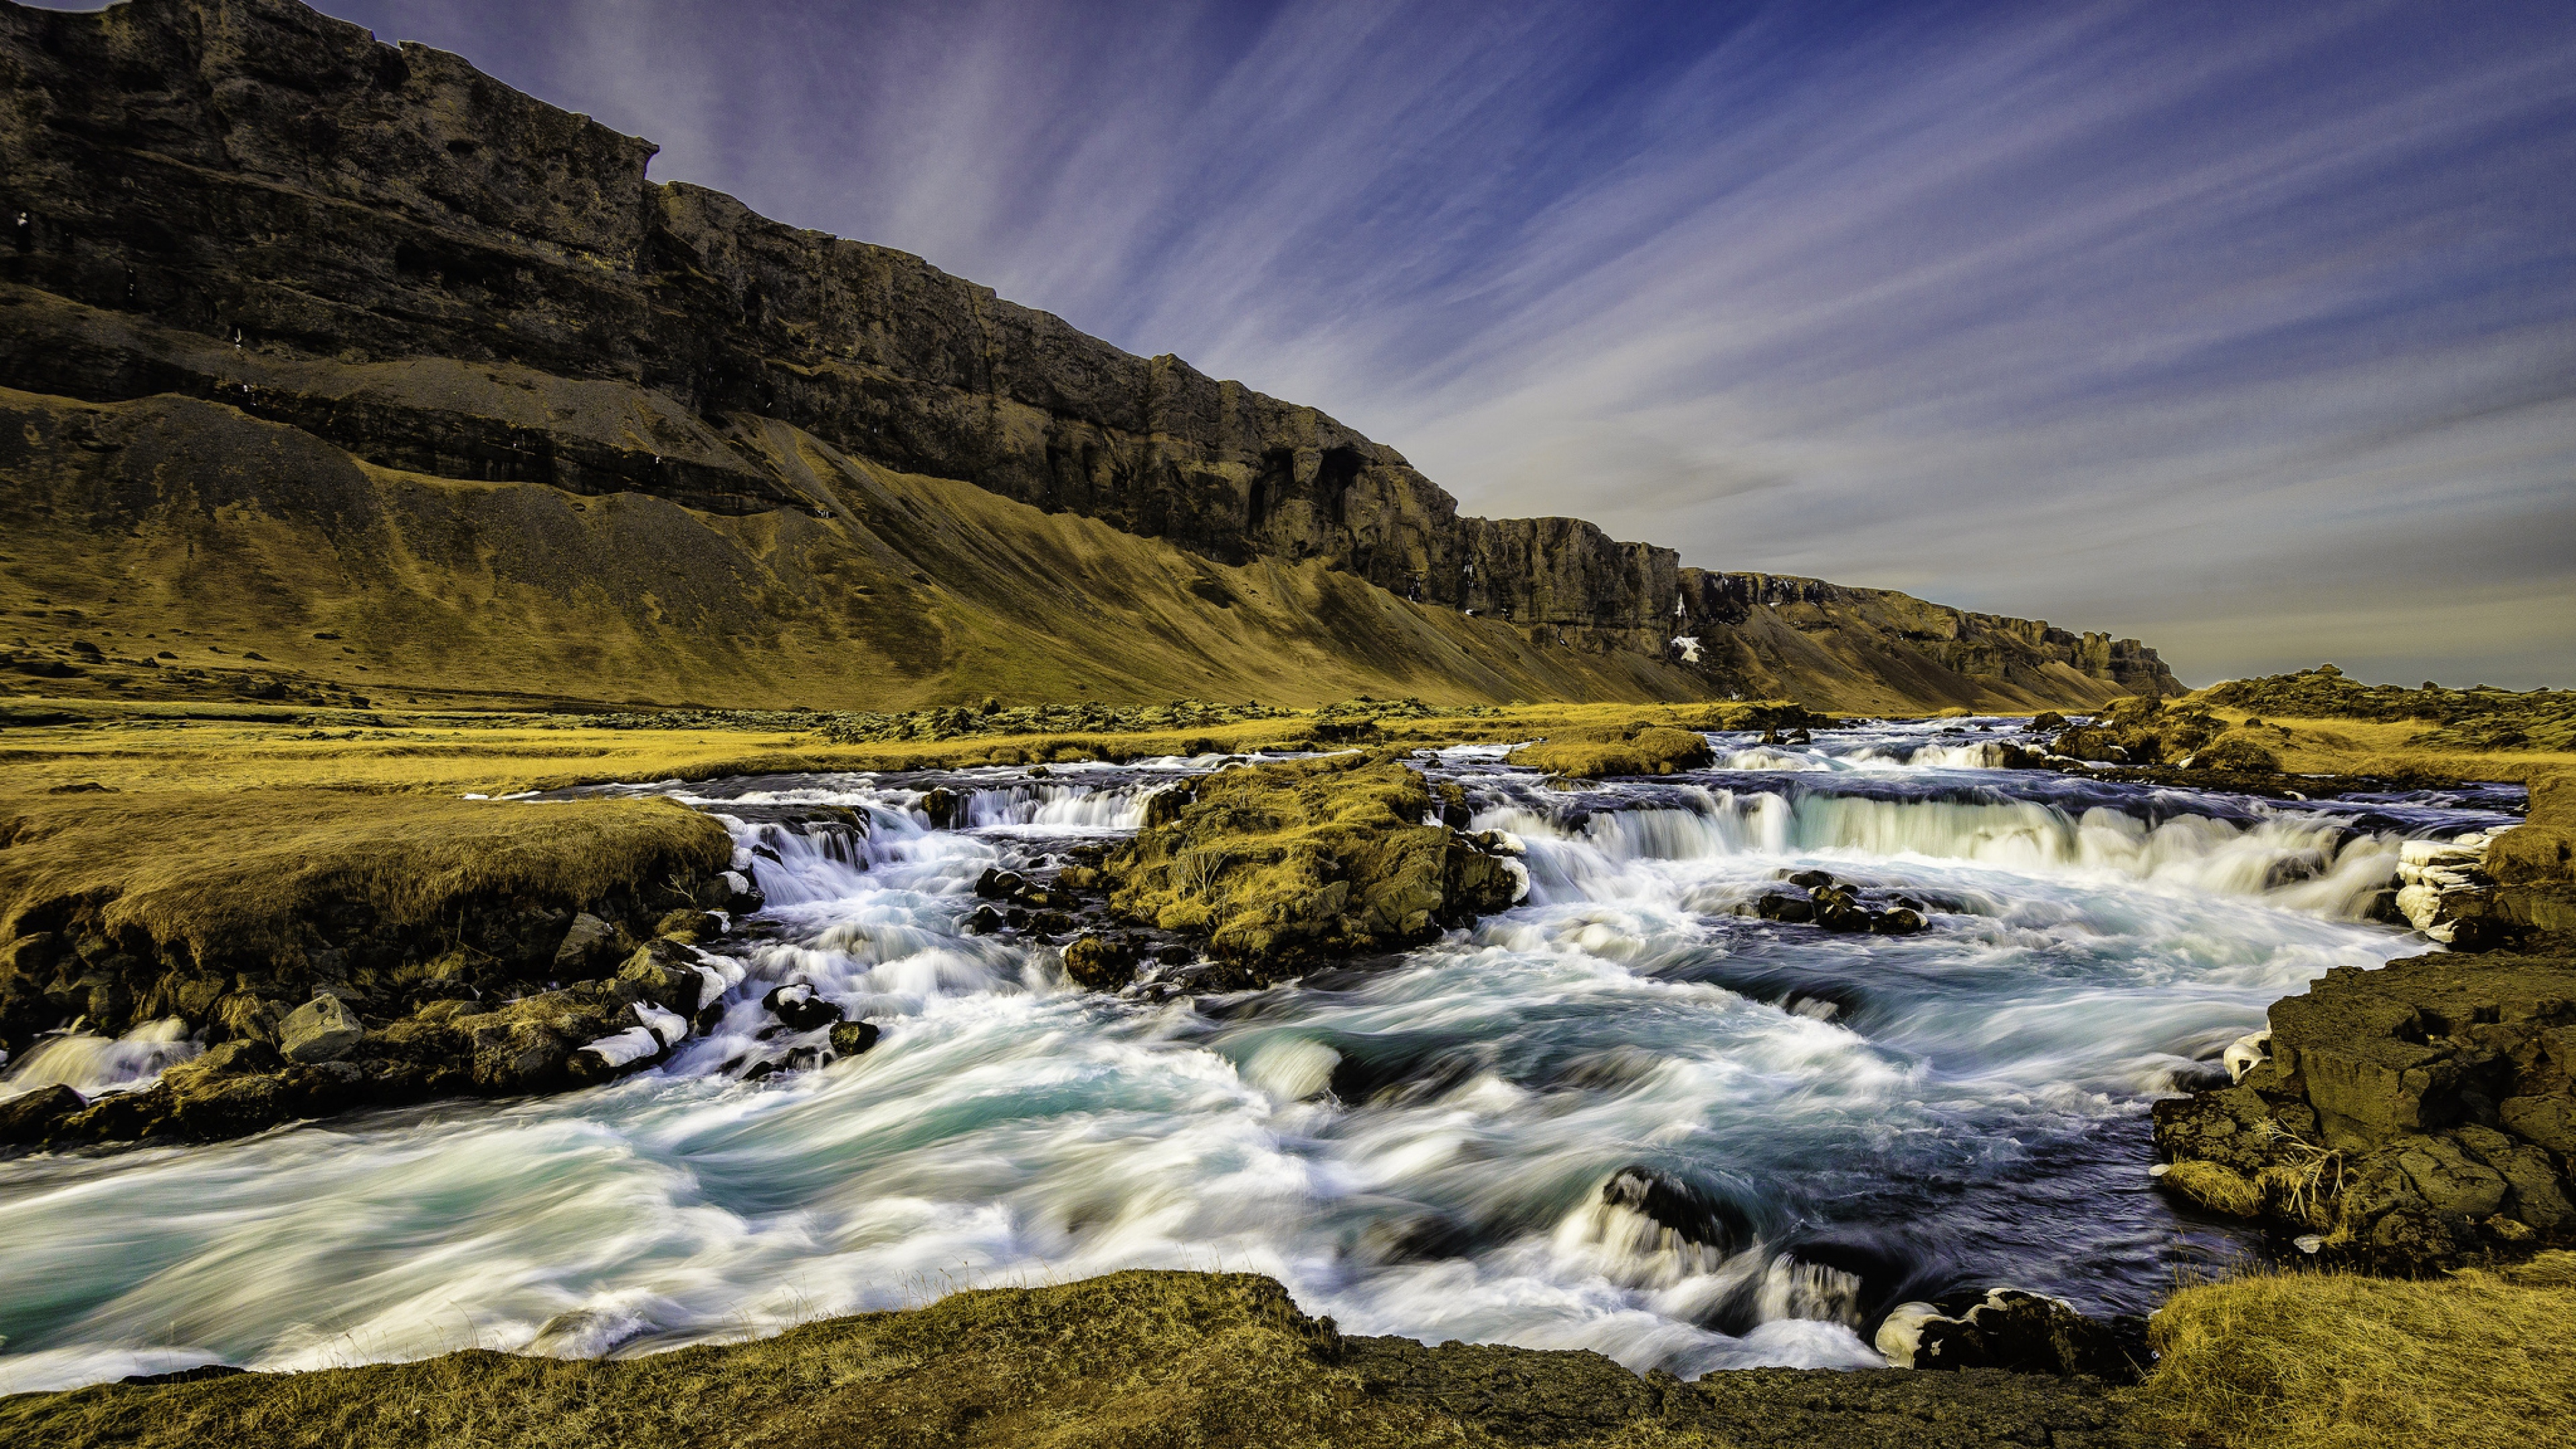 Обои на телефон река. Исландия река Тьоурсау. Исландия ландшафт. Исландия Рейкьявик природа. Плато Путорана.